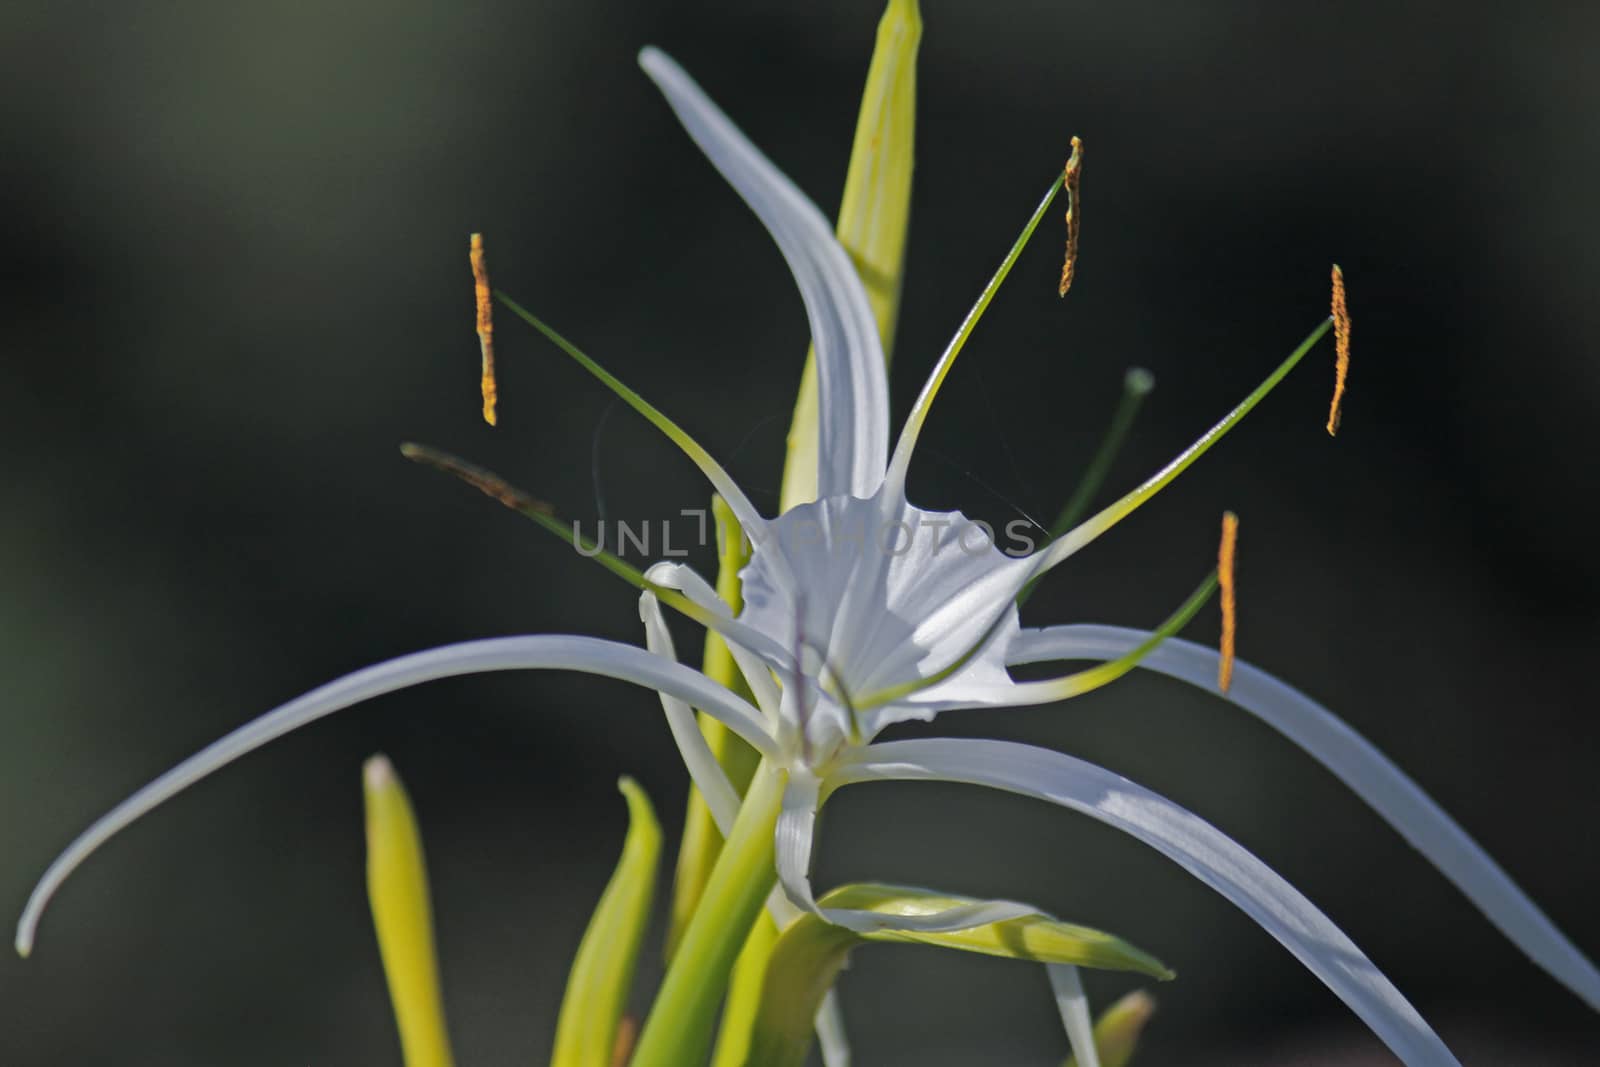 Spider lily, Beach spider lily, Hymenocallis littoralis by yands